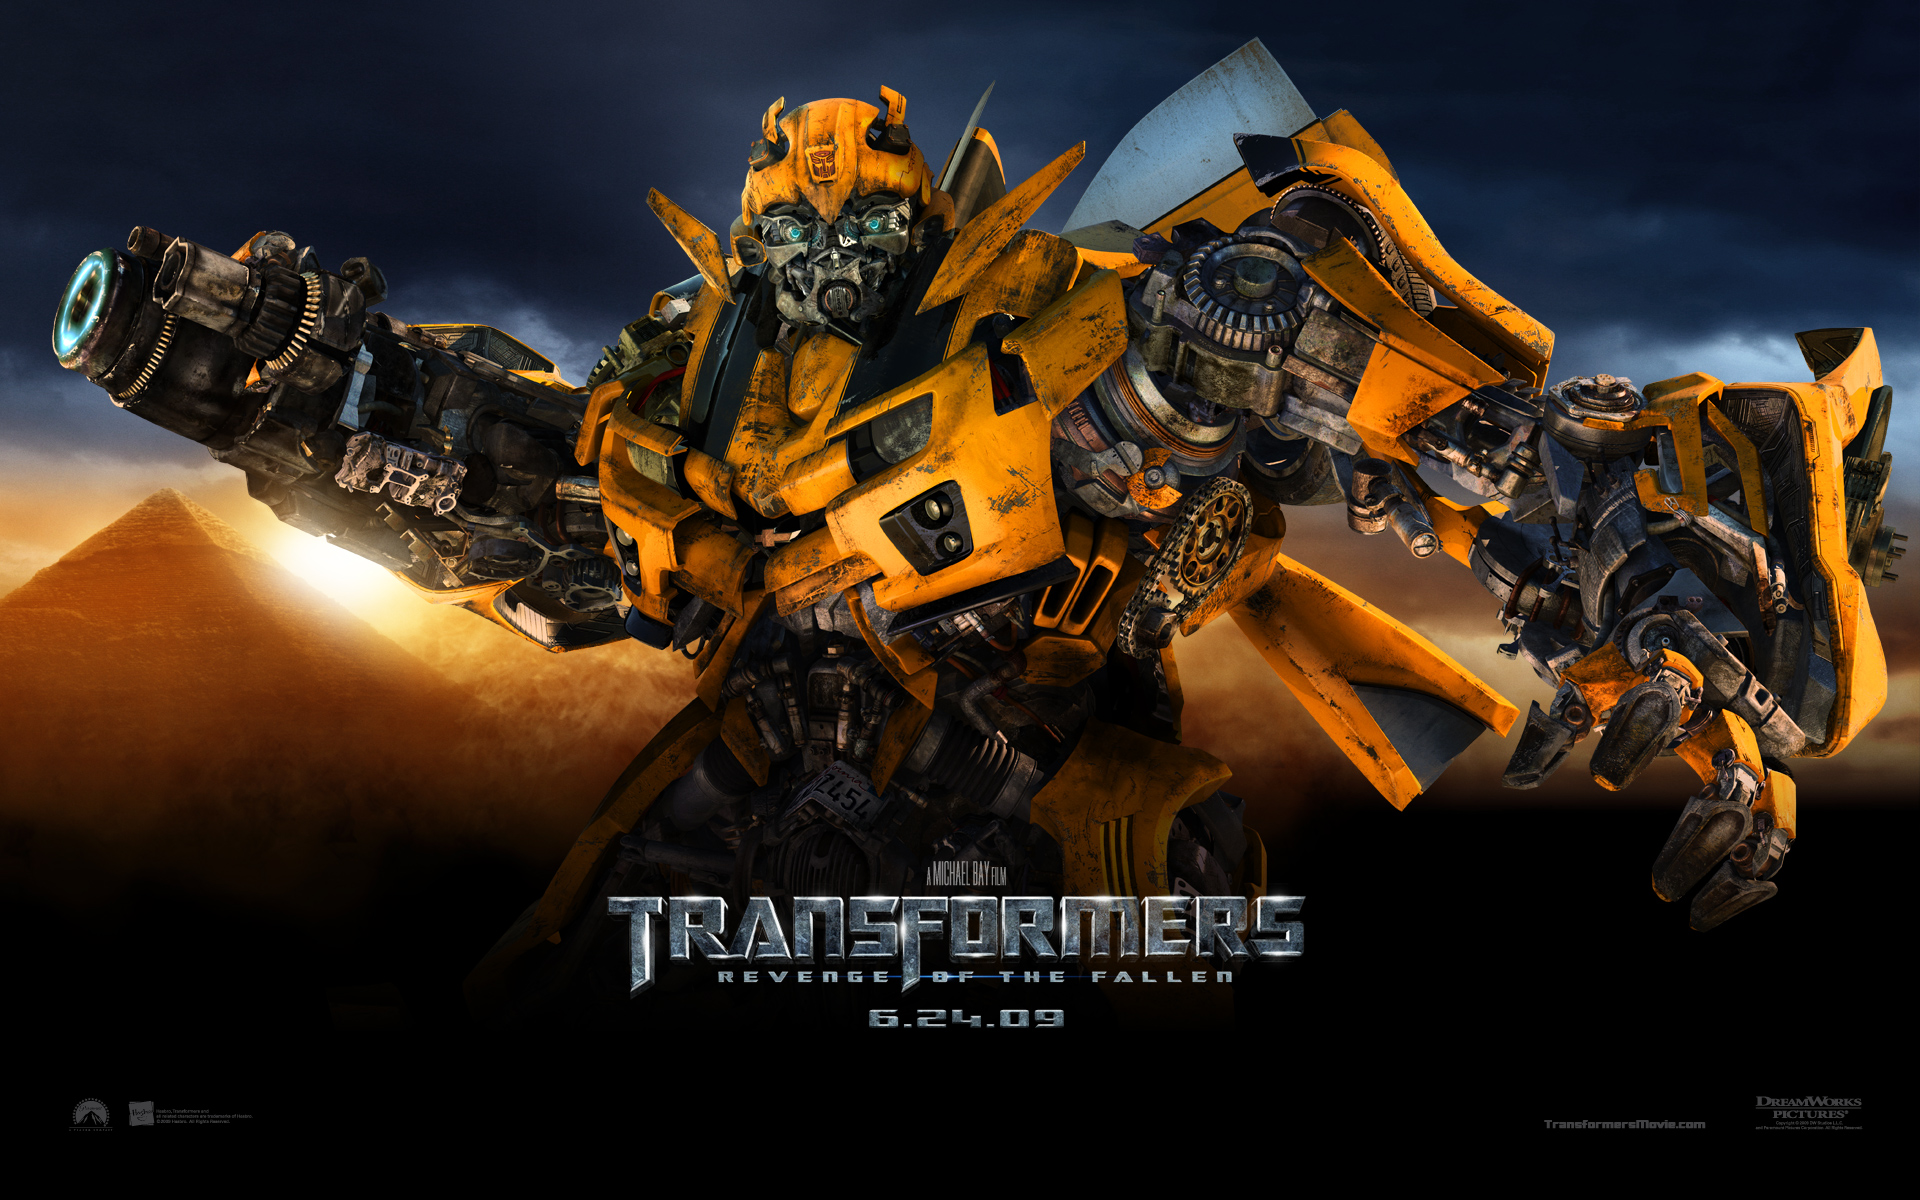 fondos de pantalla de transformers,transformadores,mecha,personaje de ficción,cg artwork,robot